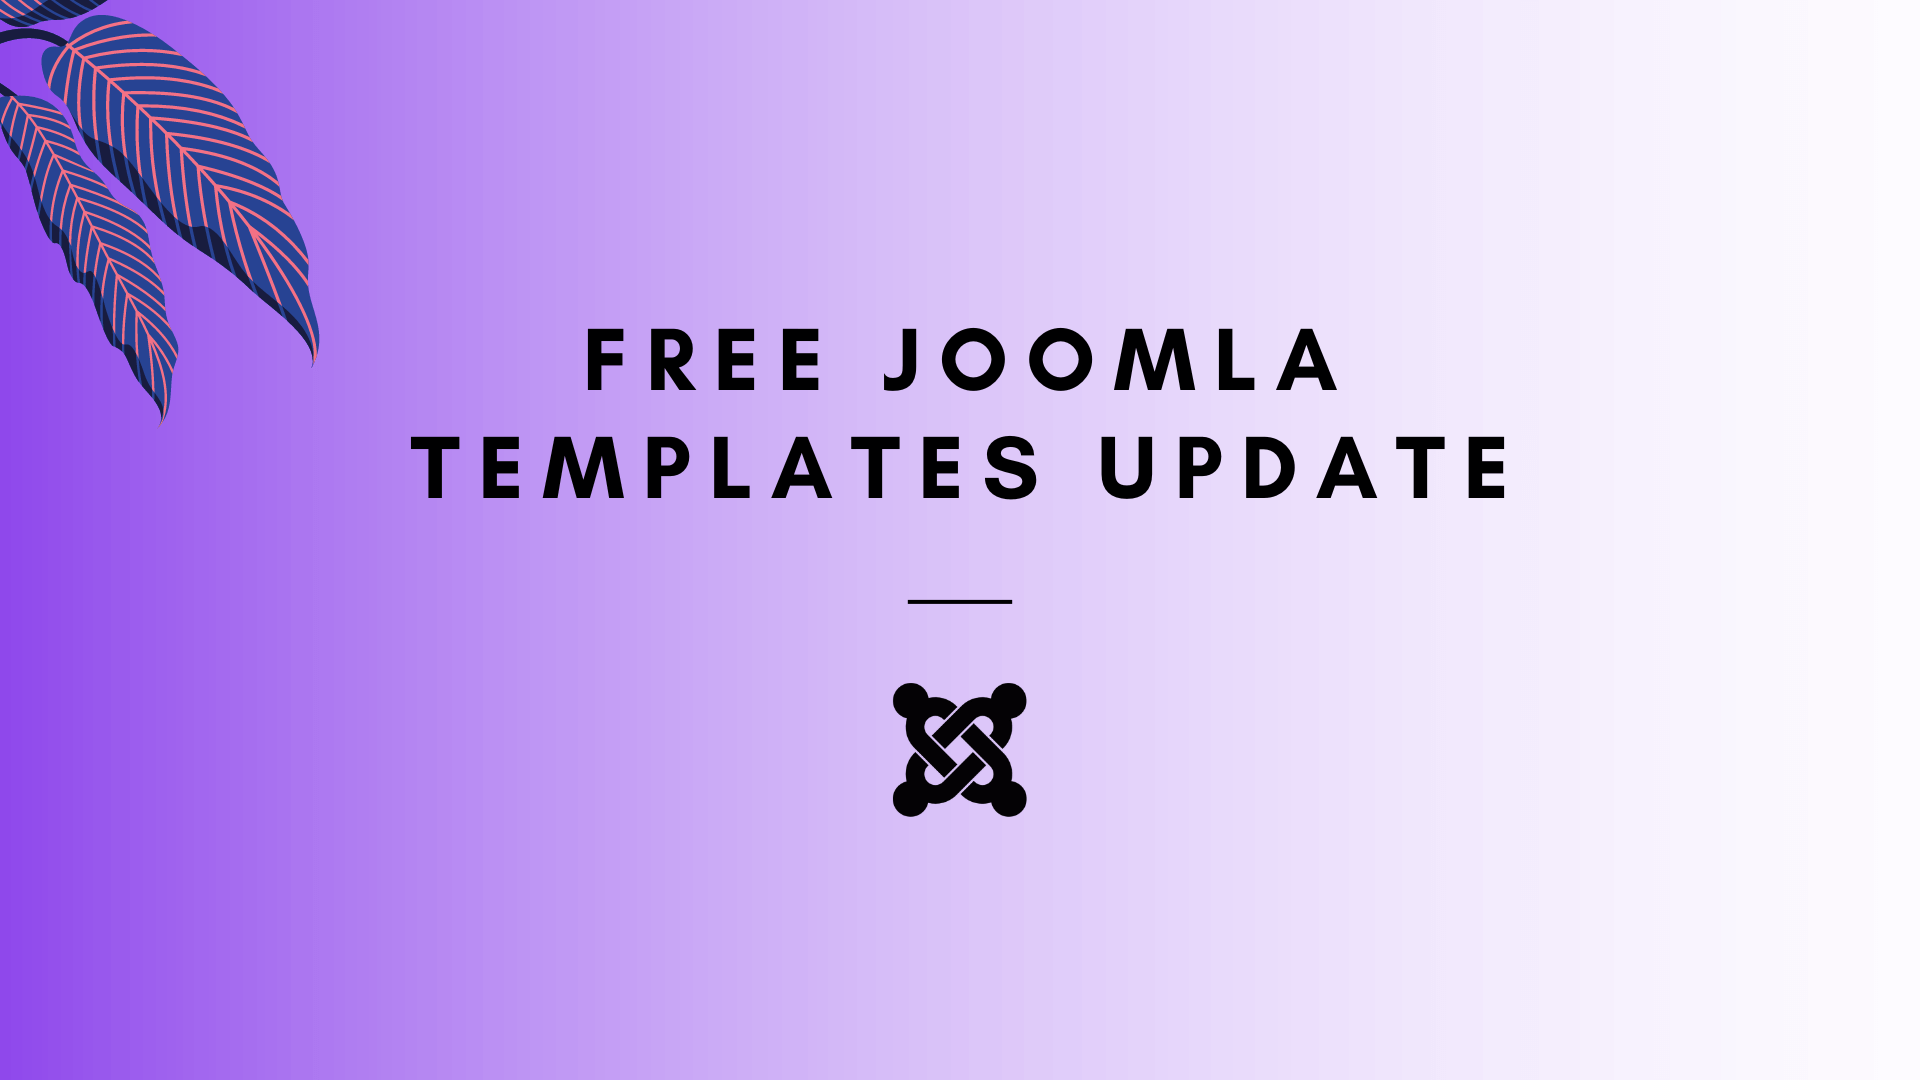 Joomla News: Free Joomla Templates Update